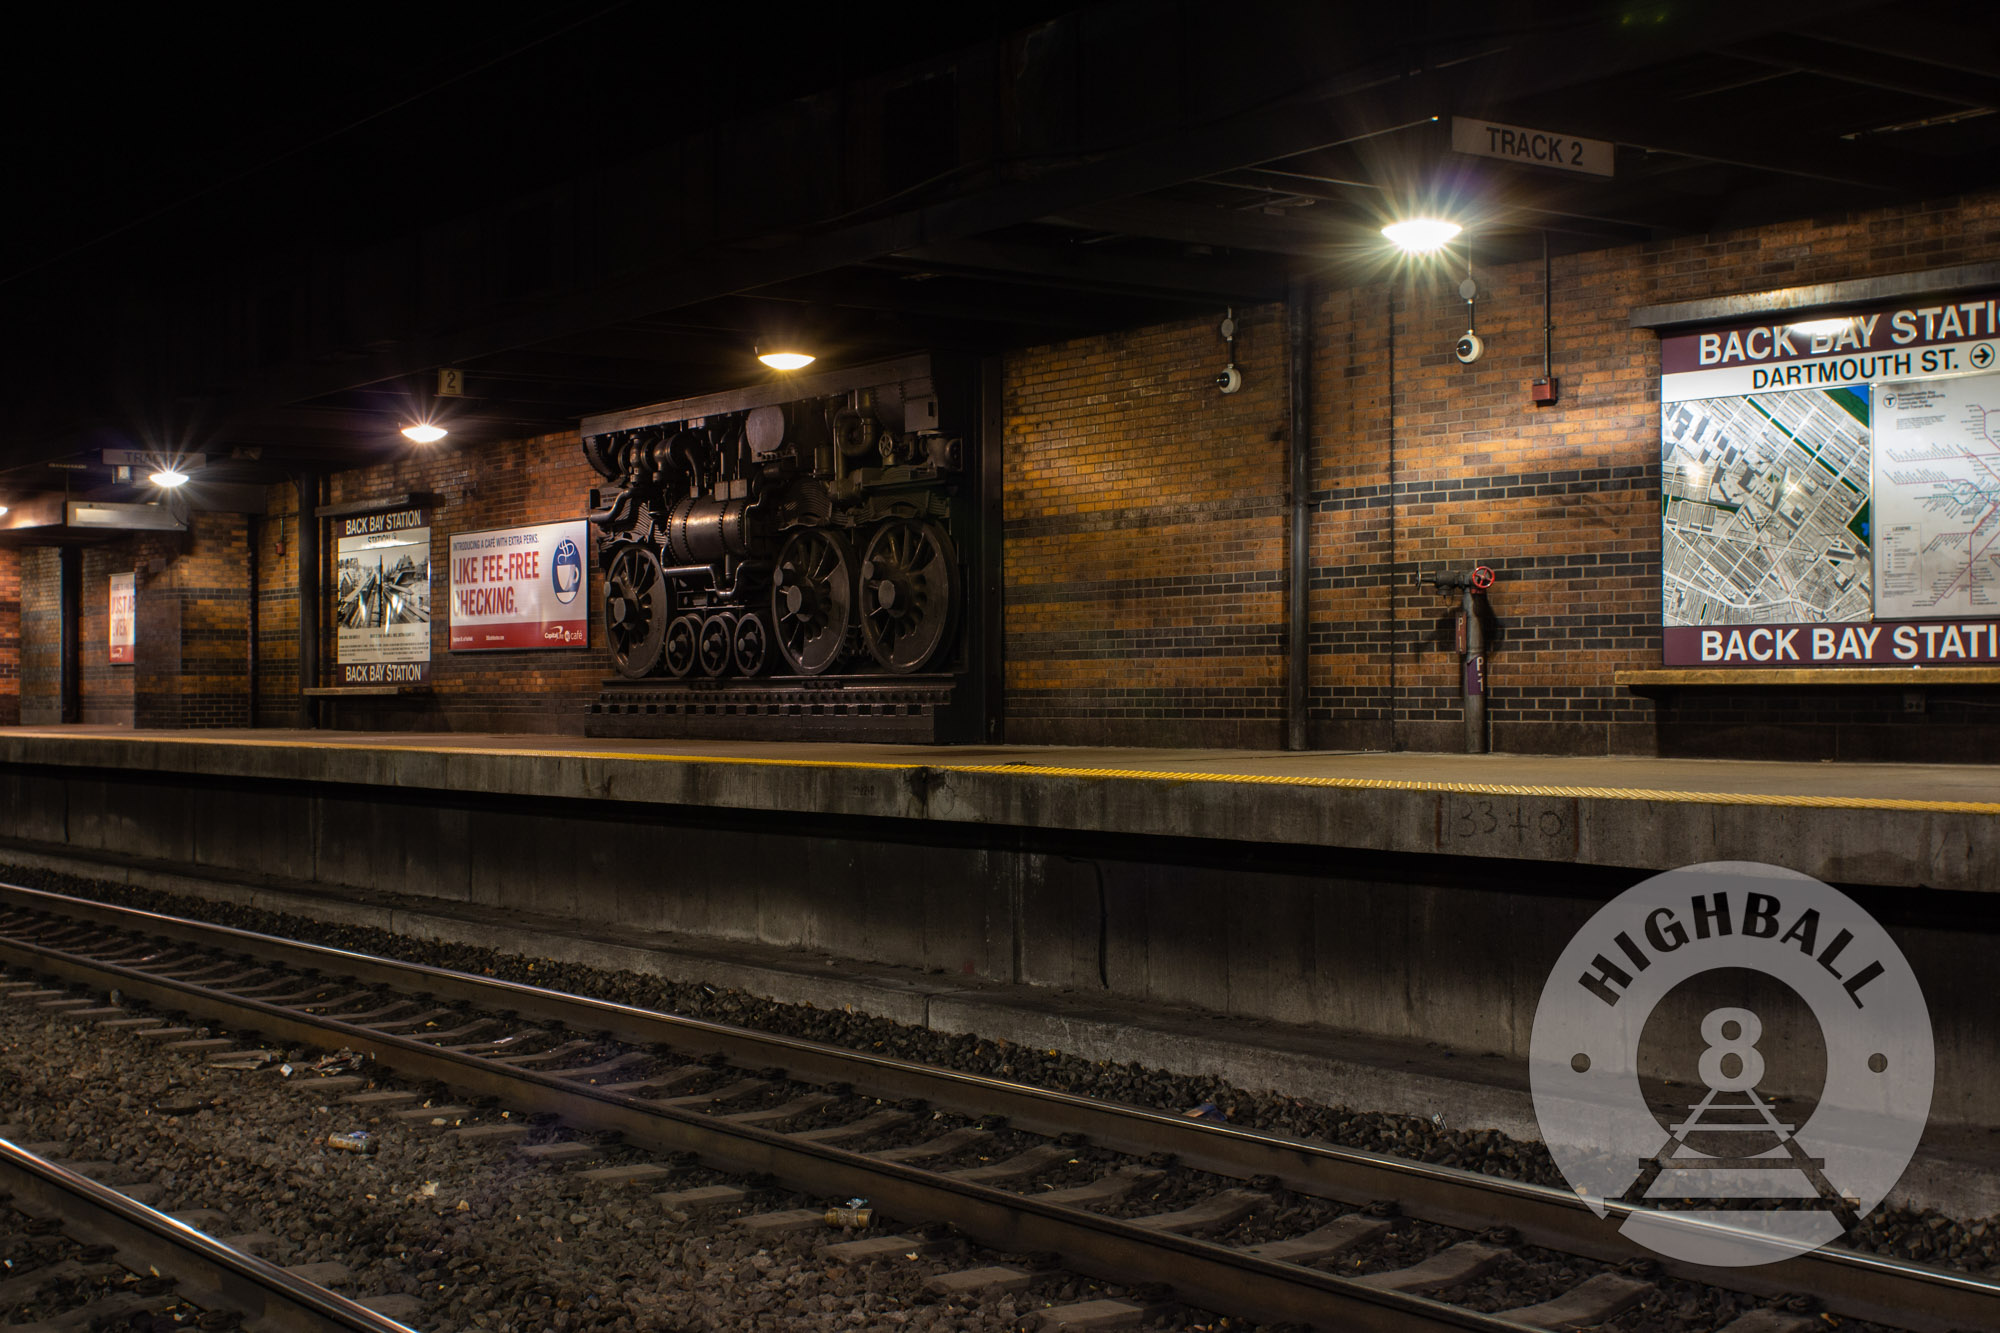 Boston Back Bay Station, Massachusetts, USA, 2014.